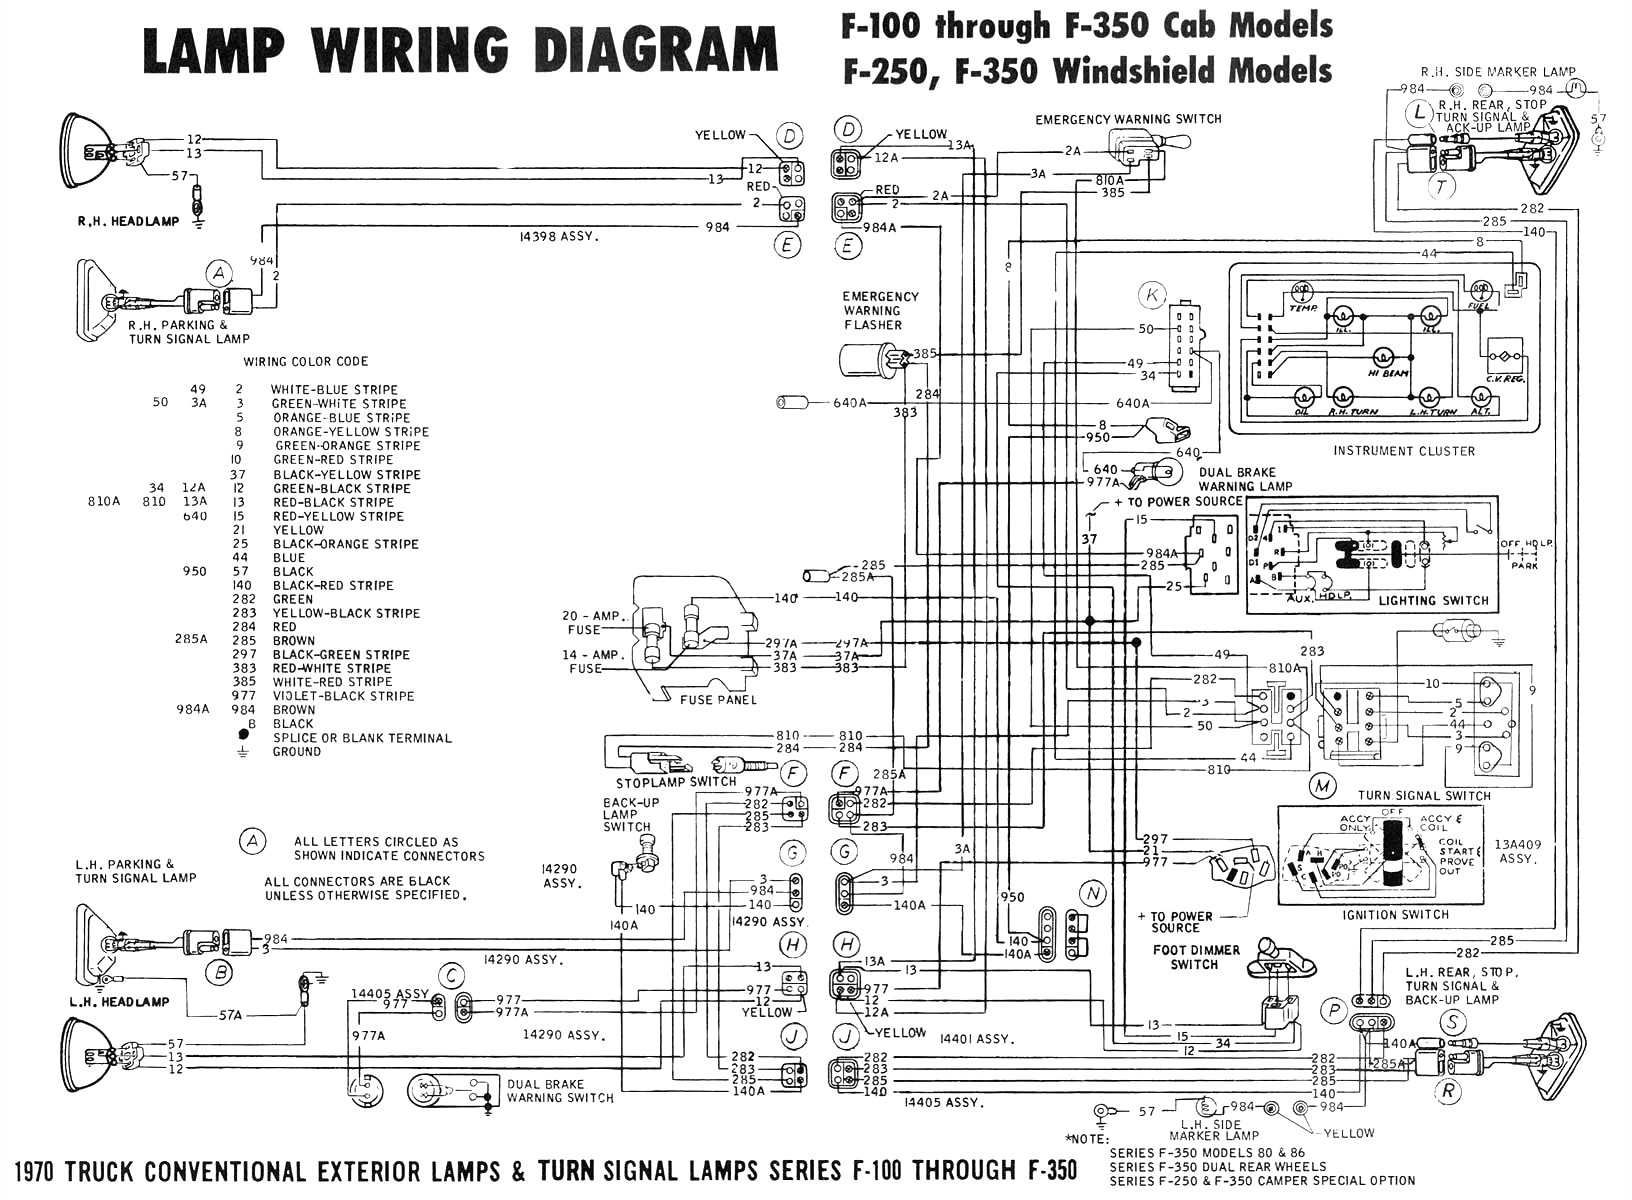 Yamaha Virago 250 Wiring Diagram 2006 ford F350 Engine Diagram Wiring Diagram Features